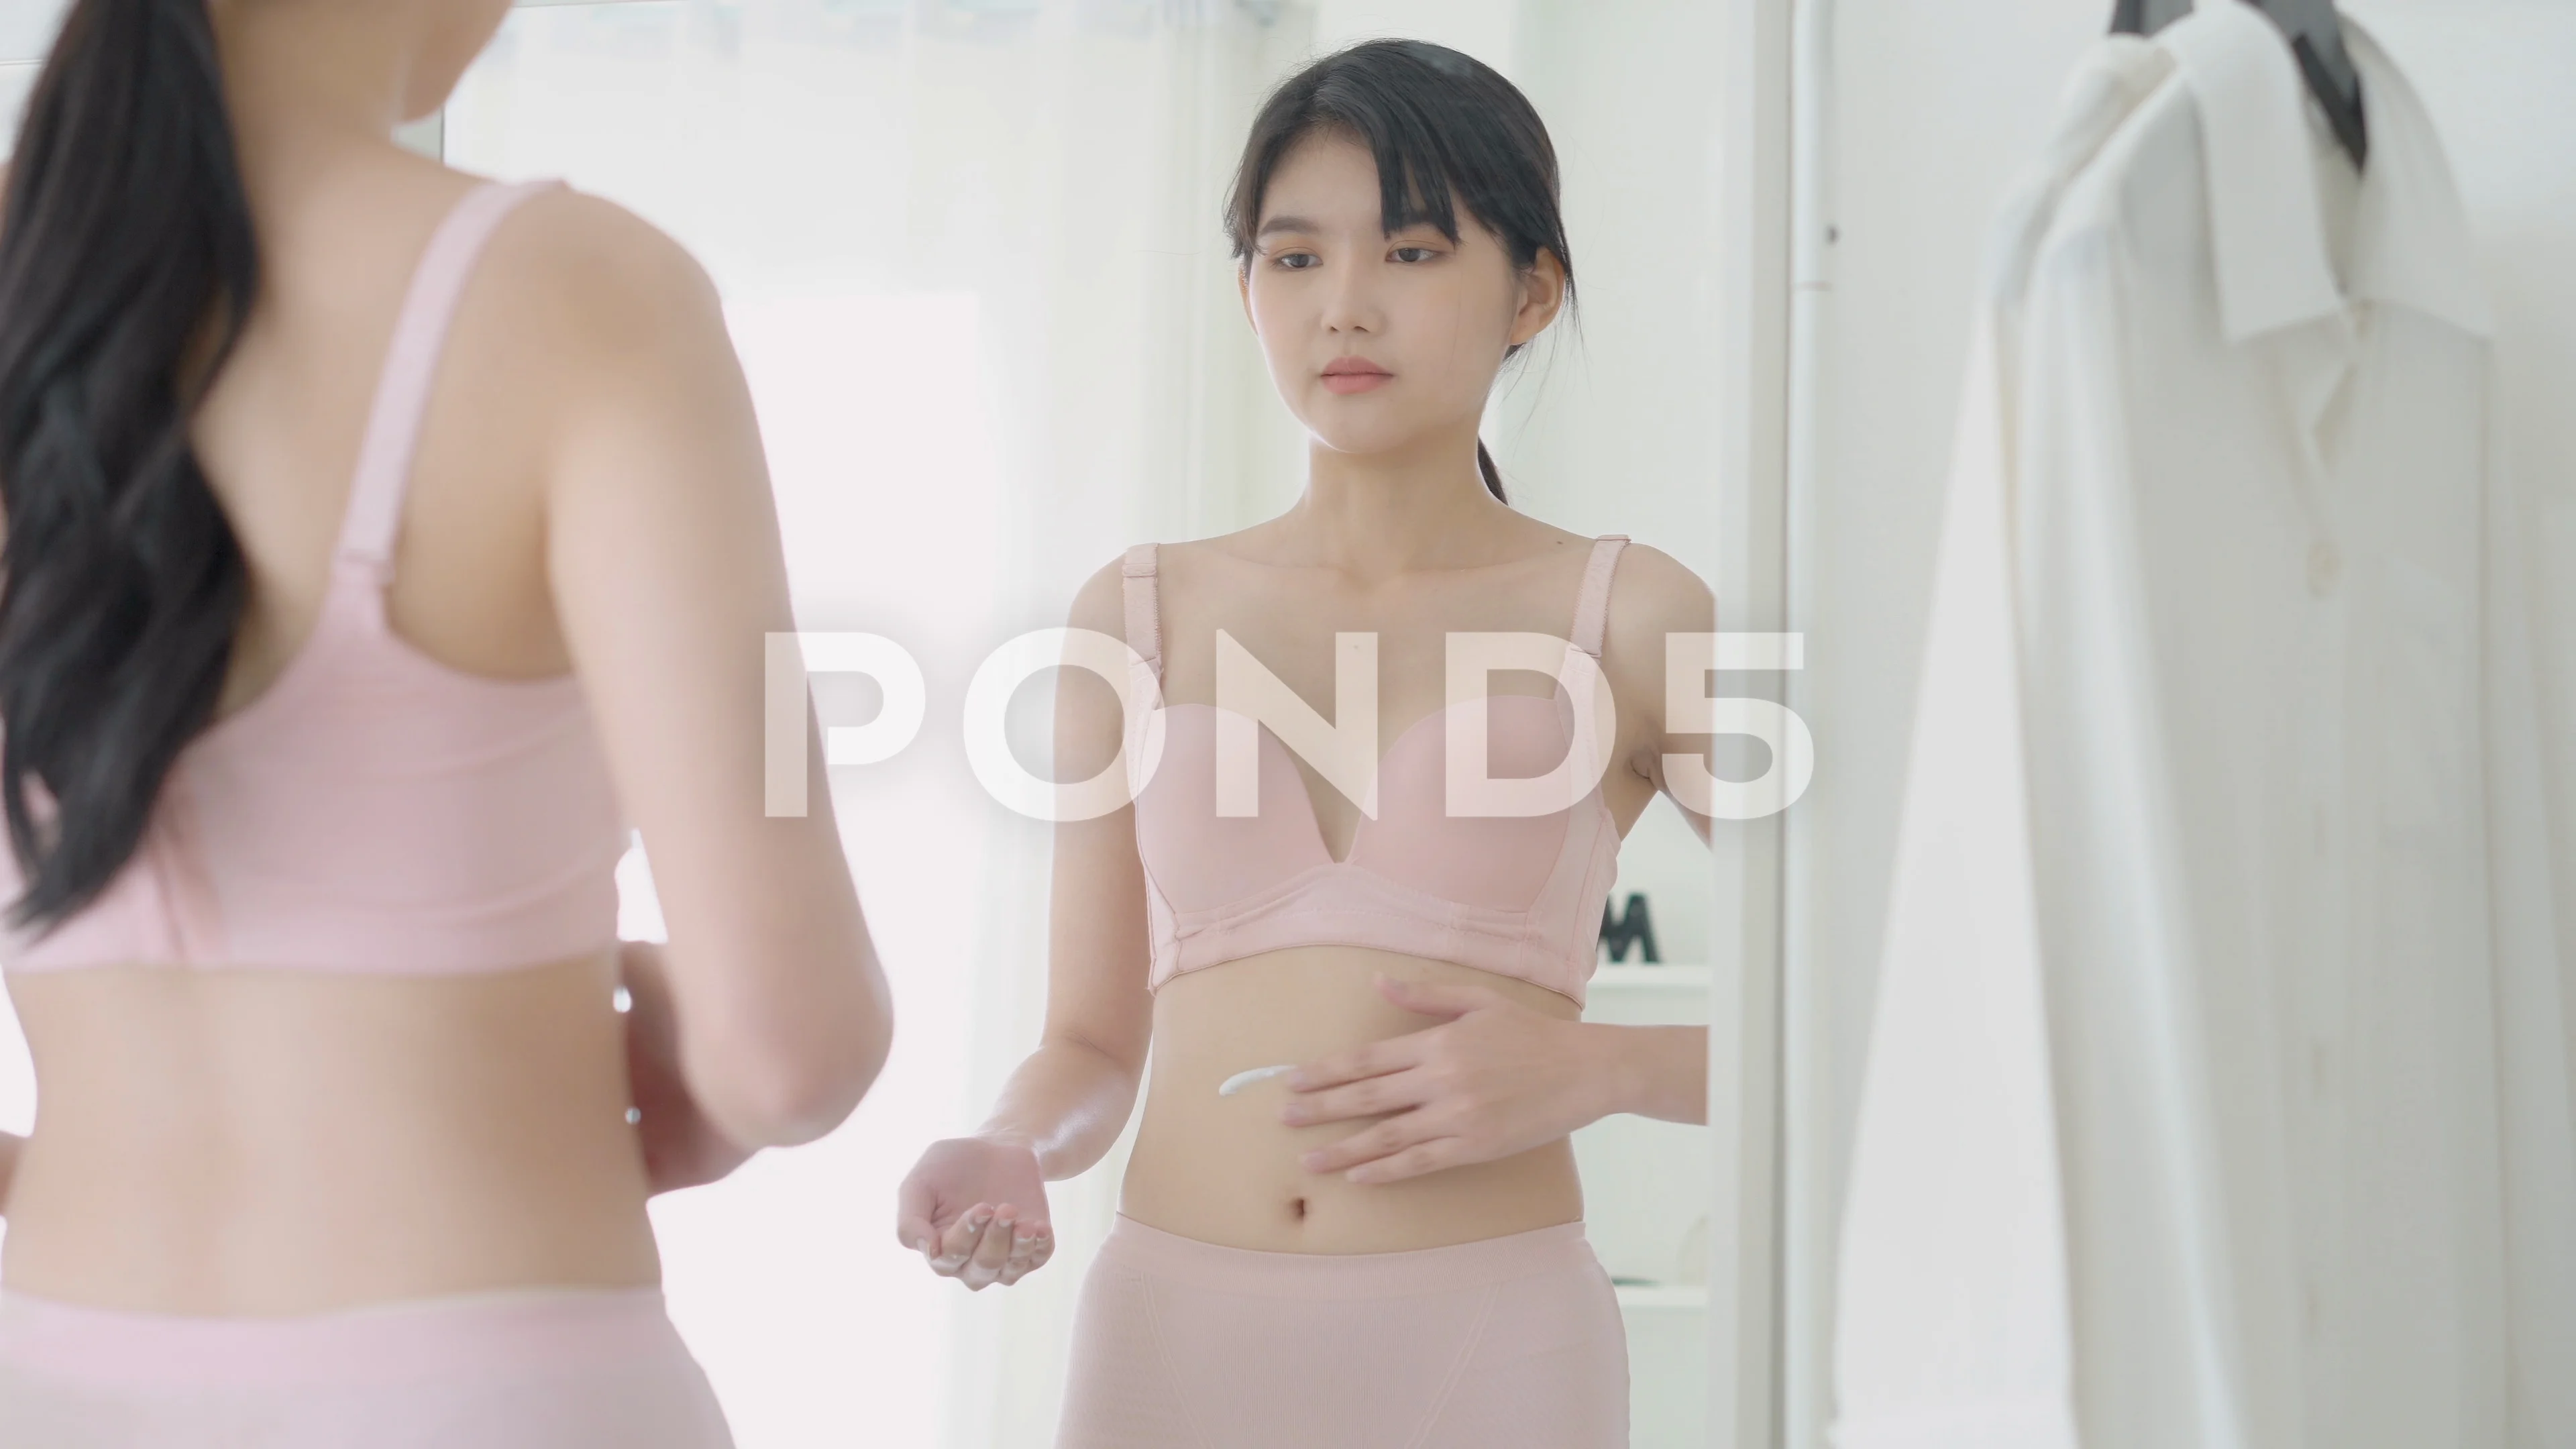 https://images.pond5.com/beautiful-young-asian-woman-underwear-footage-126395948_prevstill.jpeg